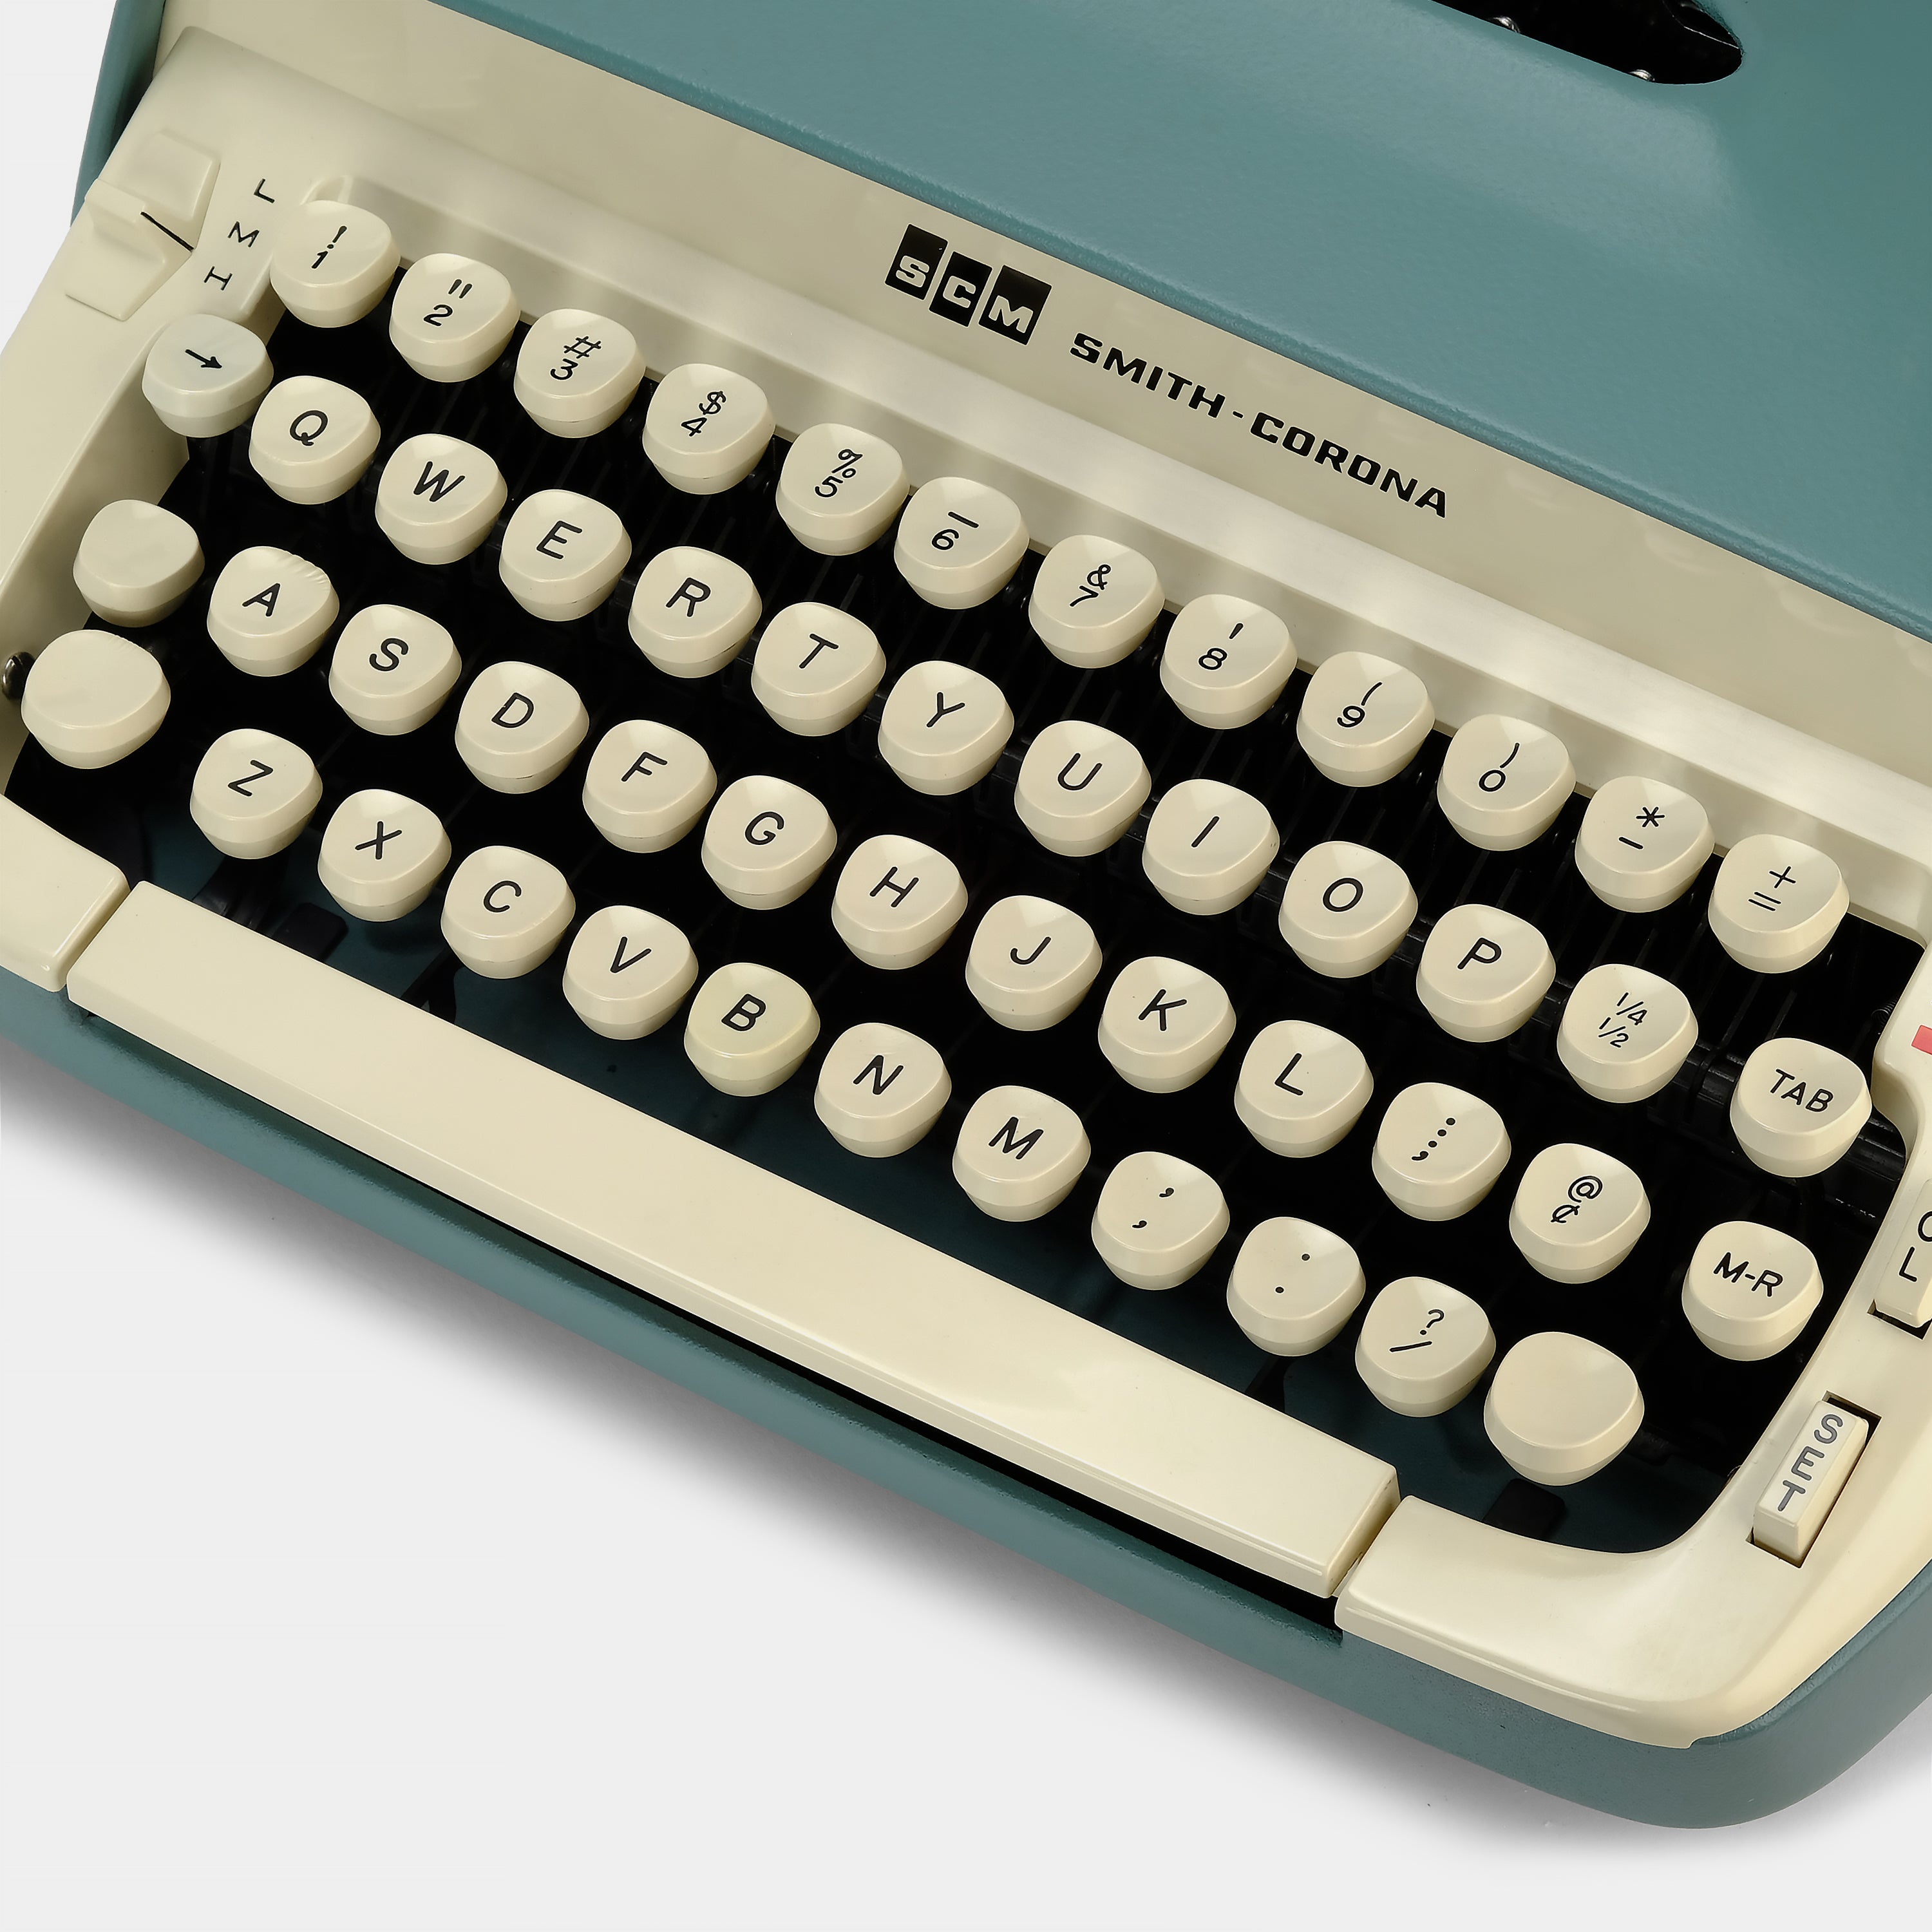 Smith-Corona Galaxie Blue Manual Typewriter and Case